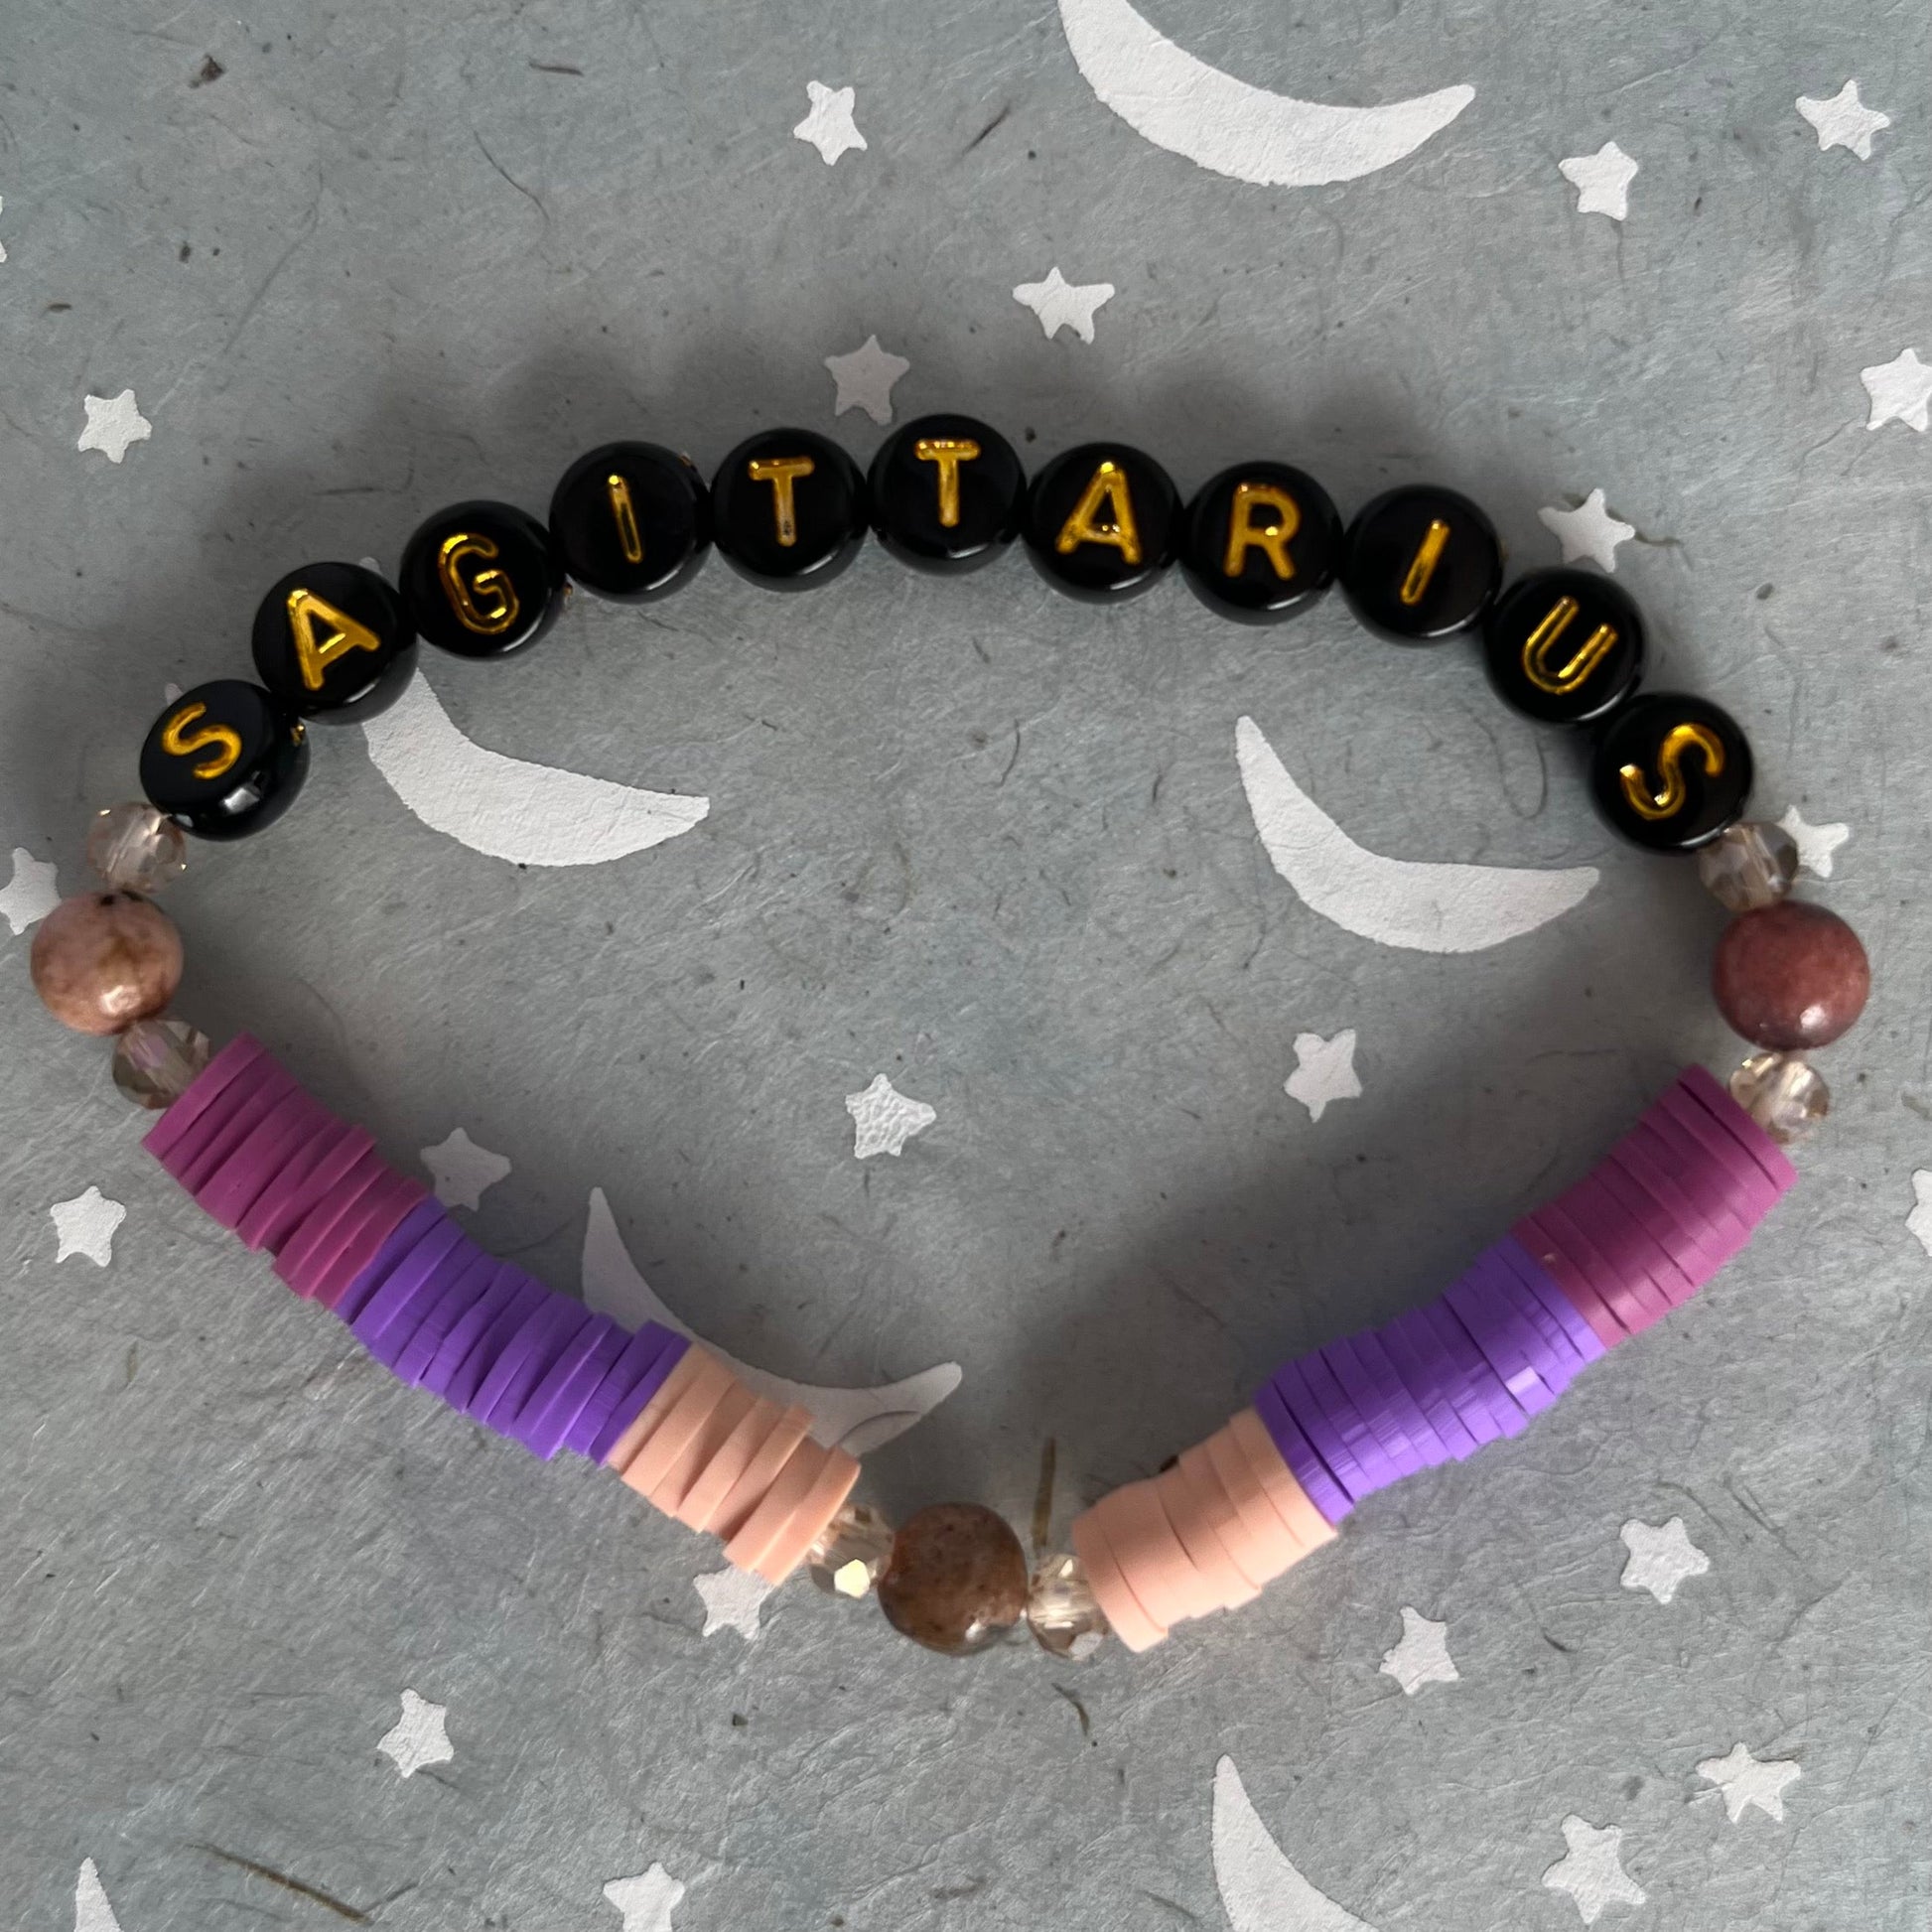 Sagittarius Zodiac Bracelet